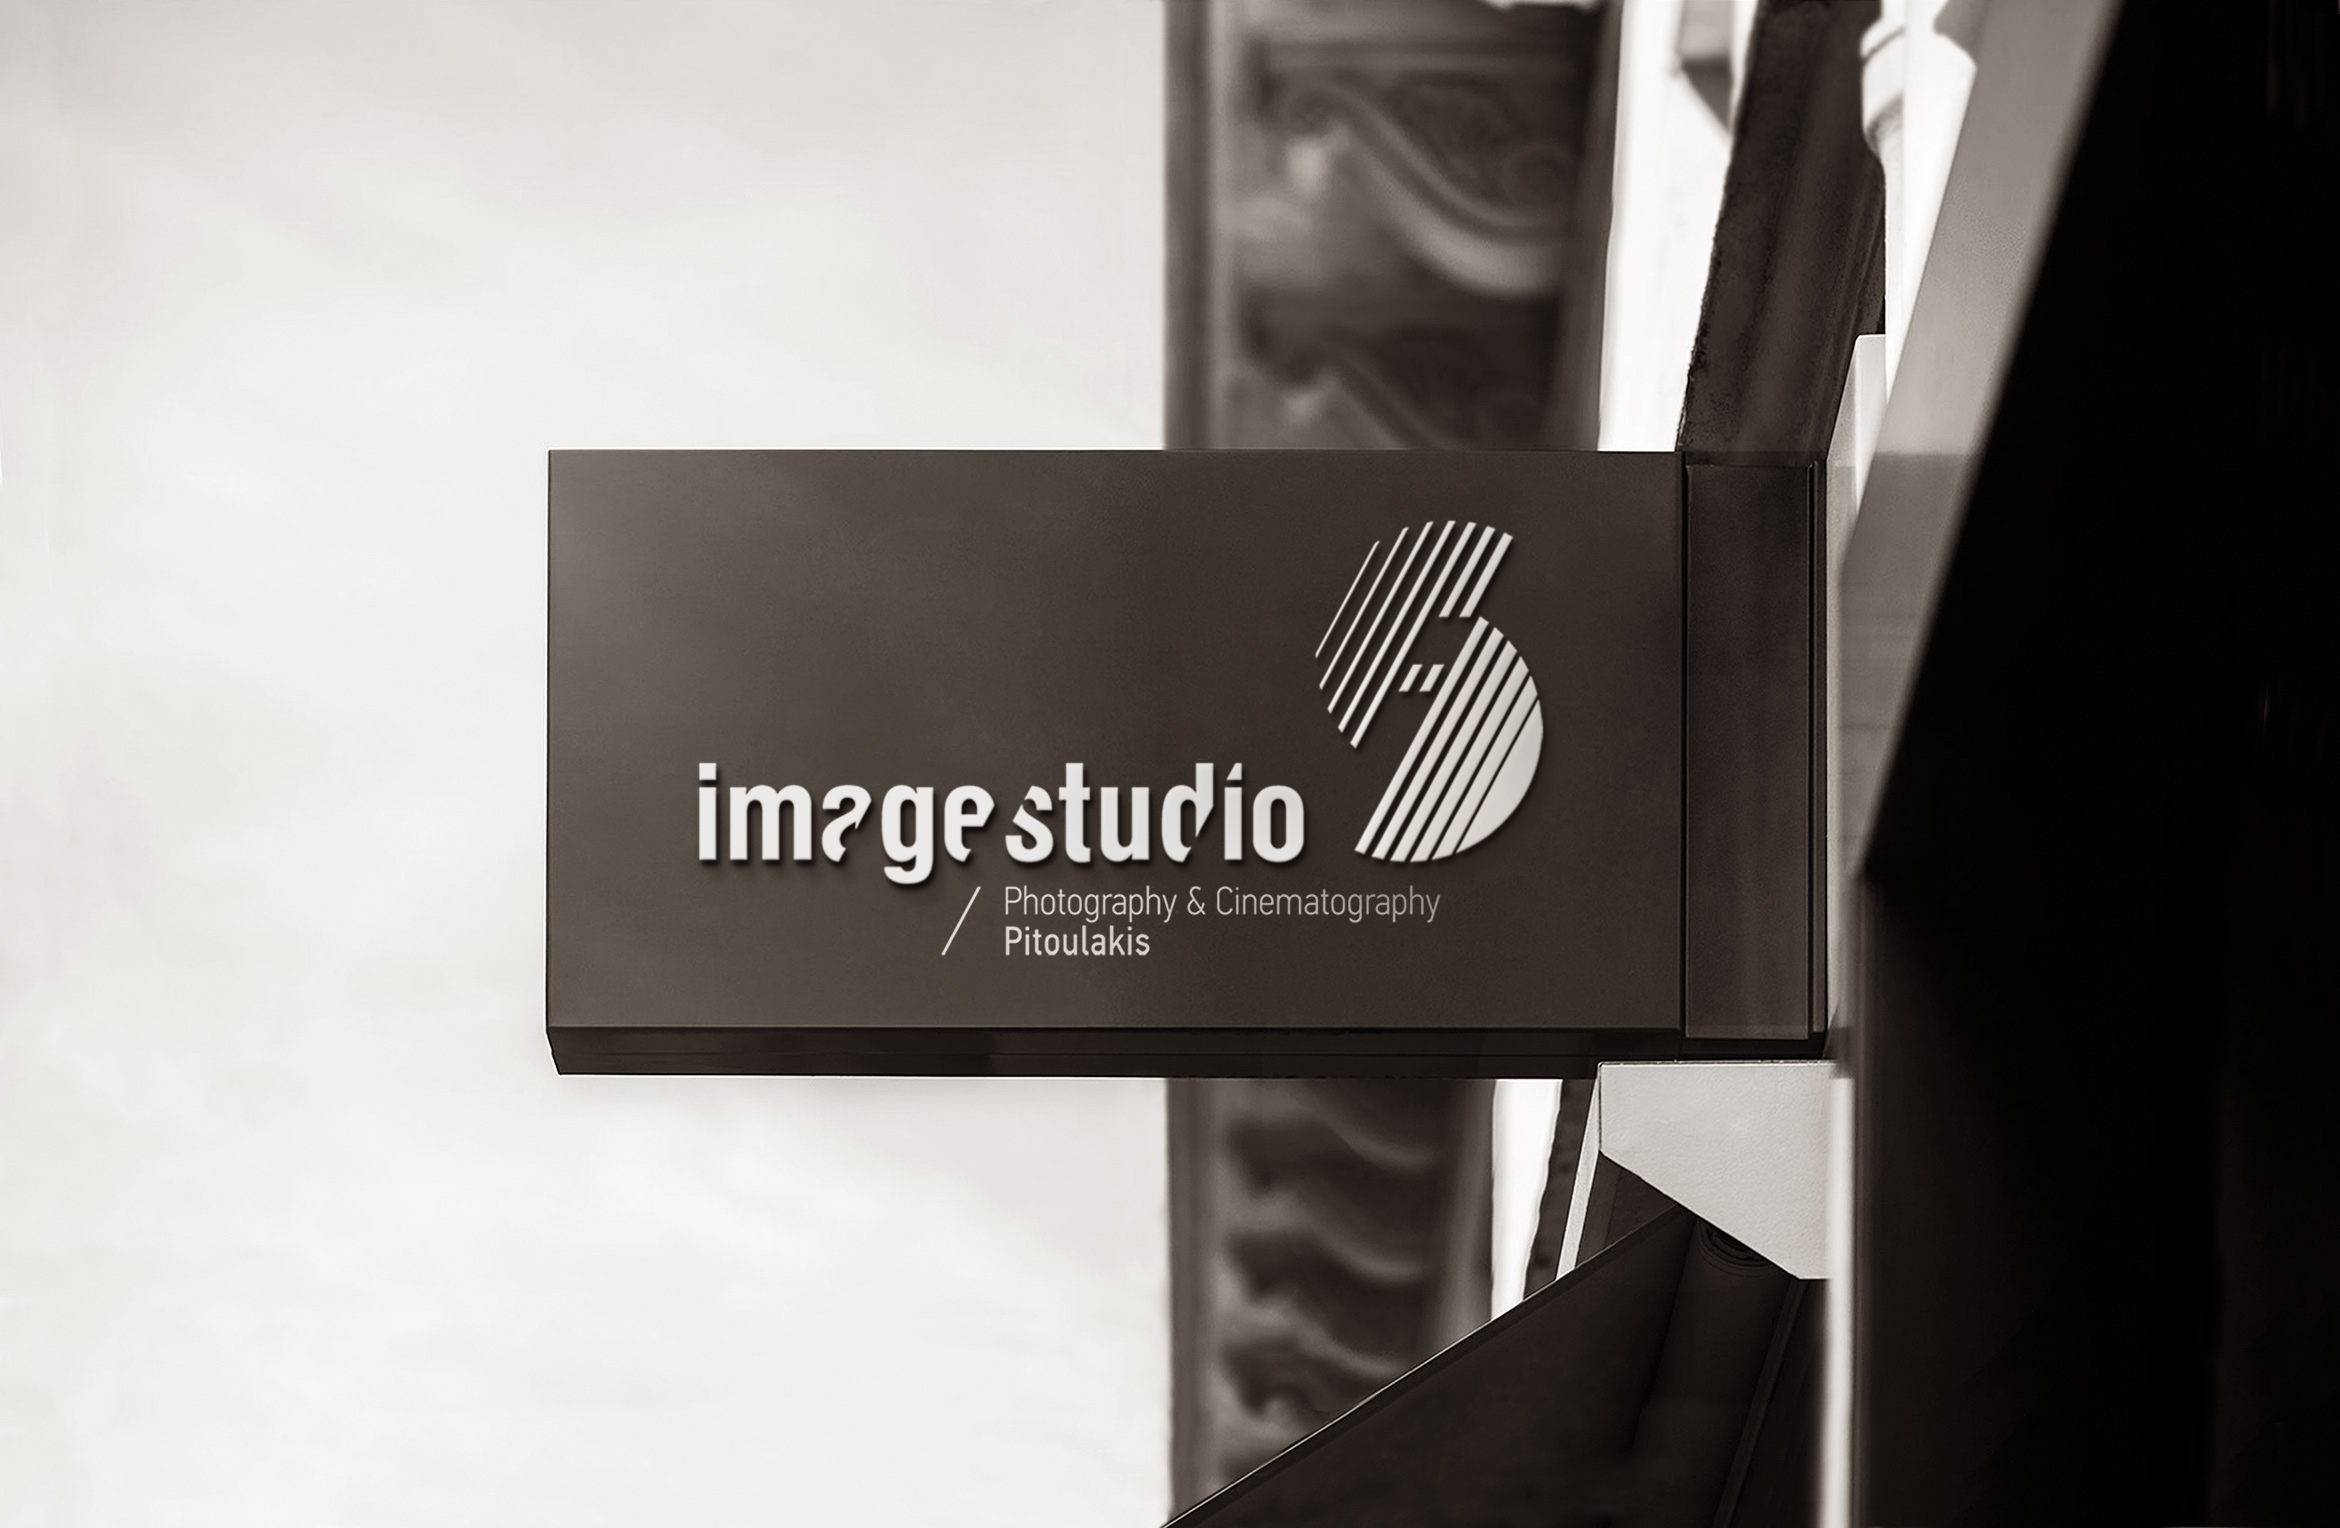 Image Studio signage